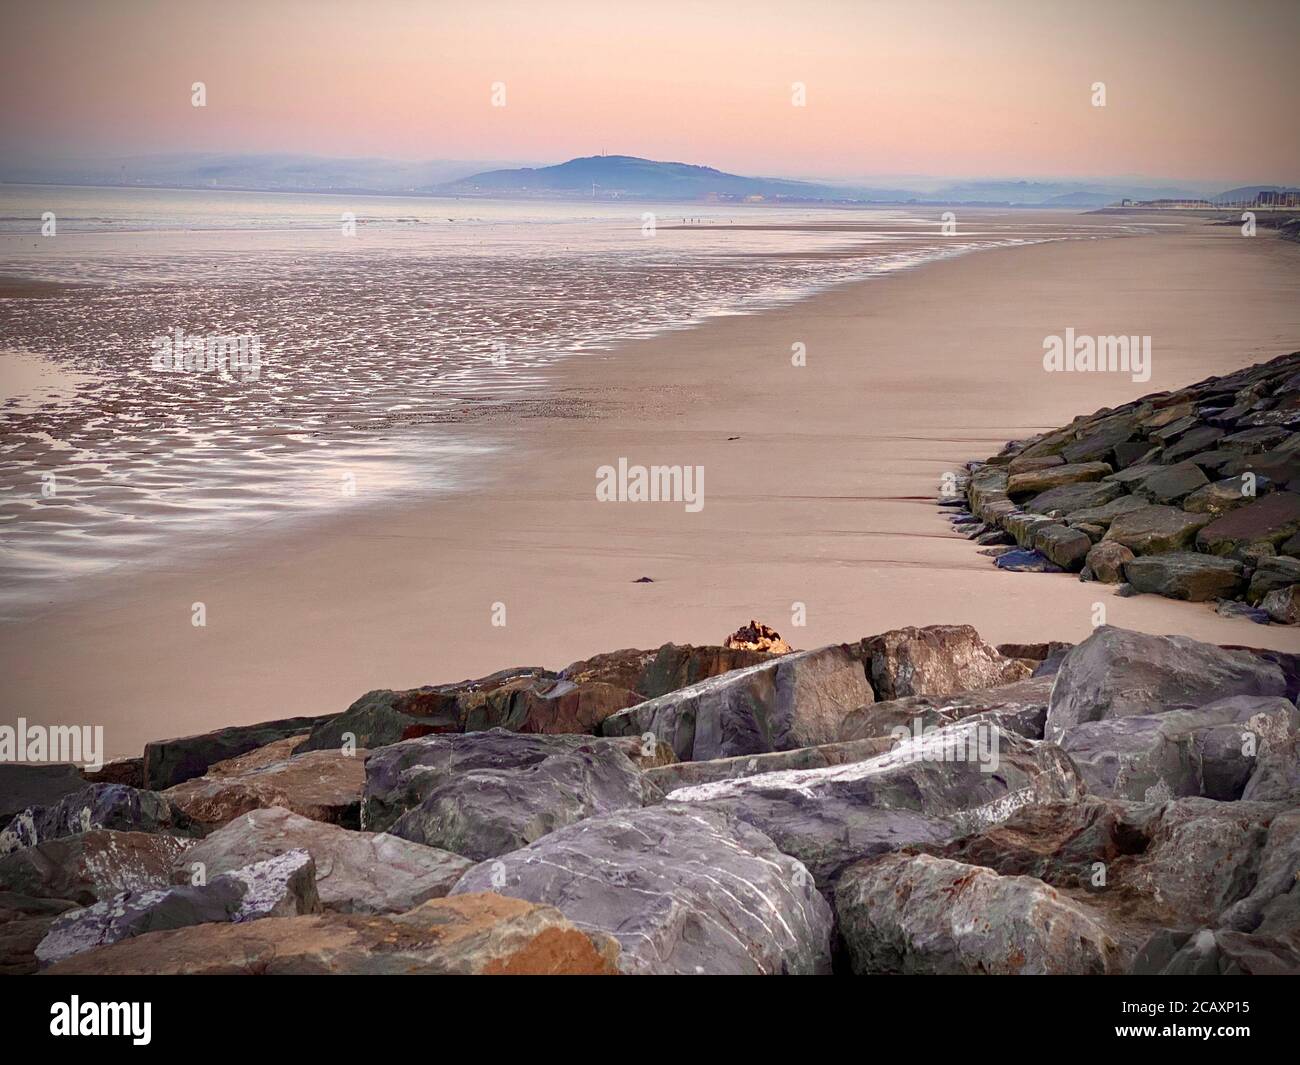 Idyllic empty beach seashore scene at sunrise, showing rocks, sand, sea and hills in the background Stock Photo